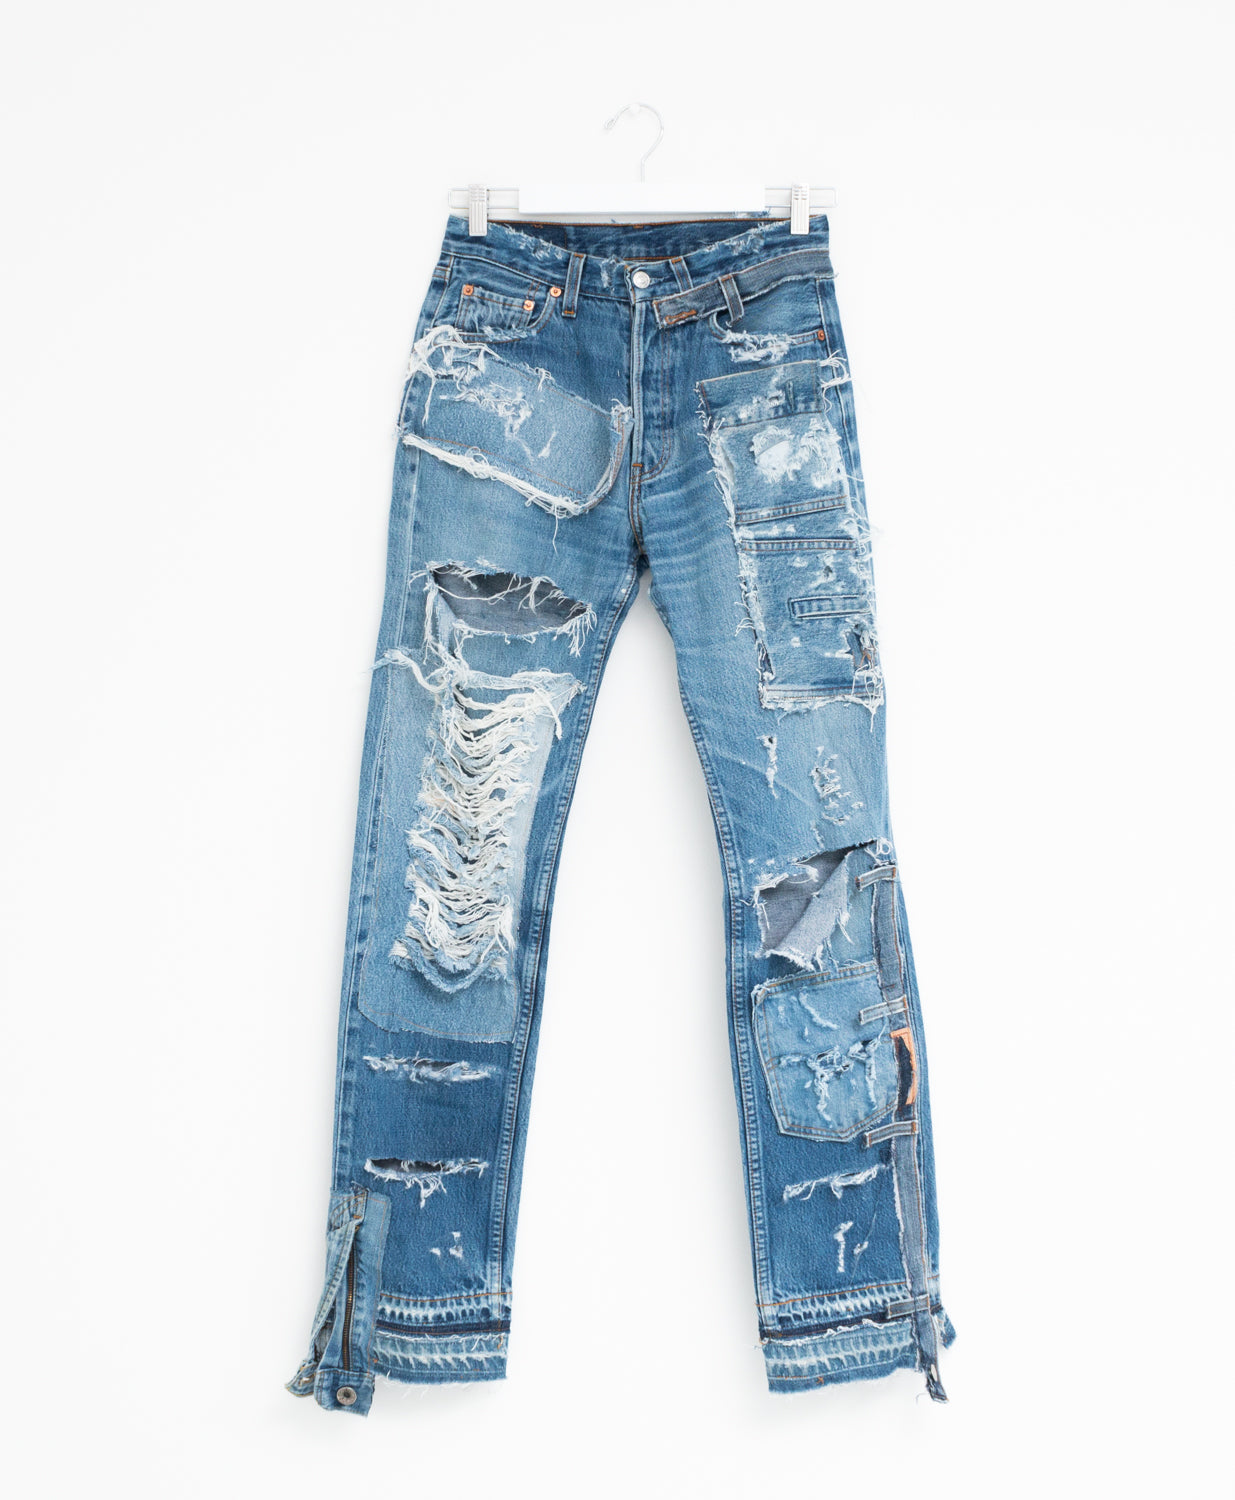 "PATCHWORK" Jeans